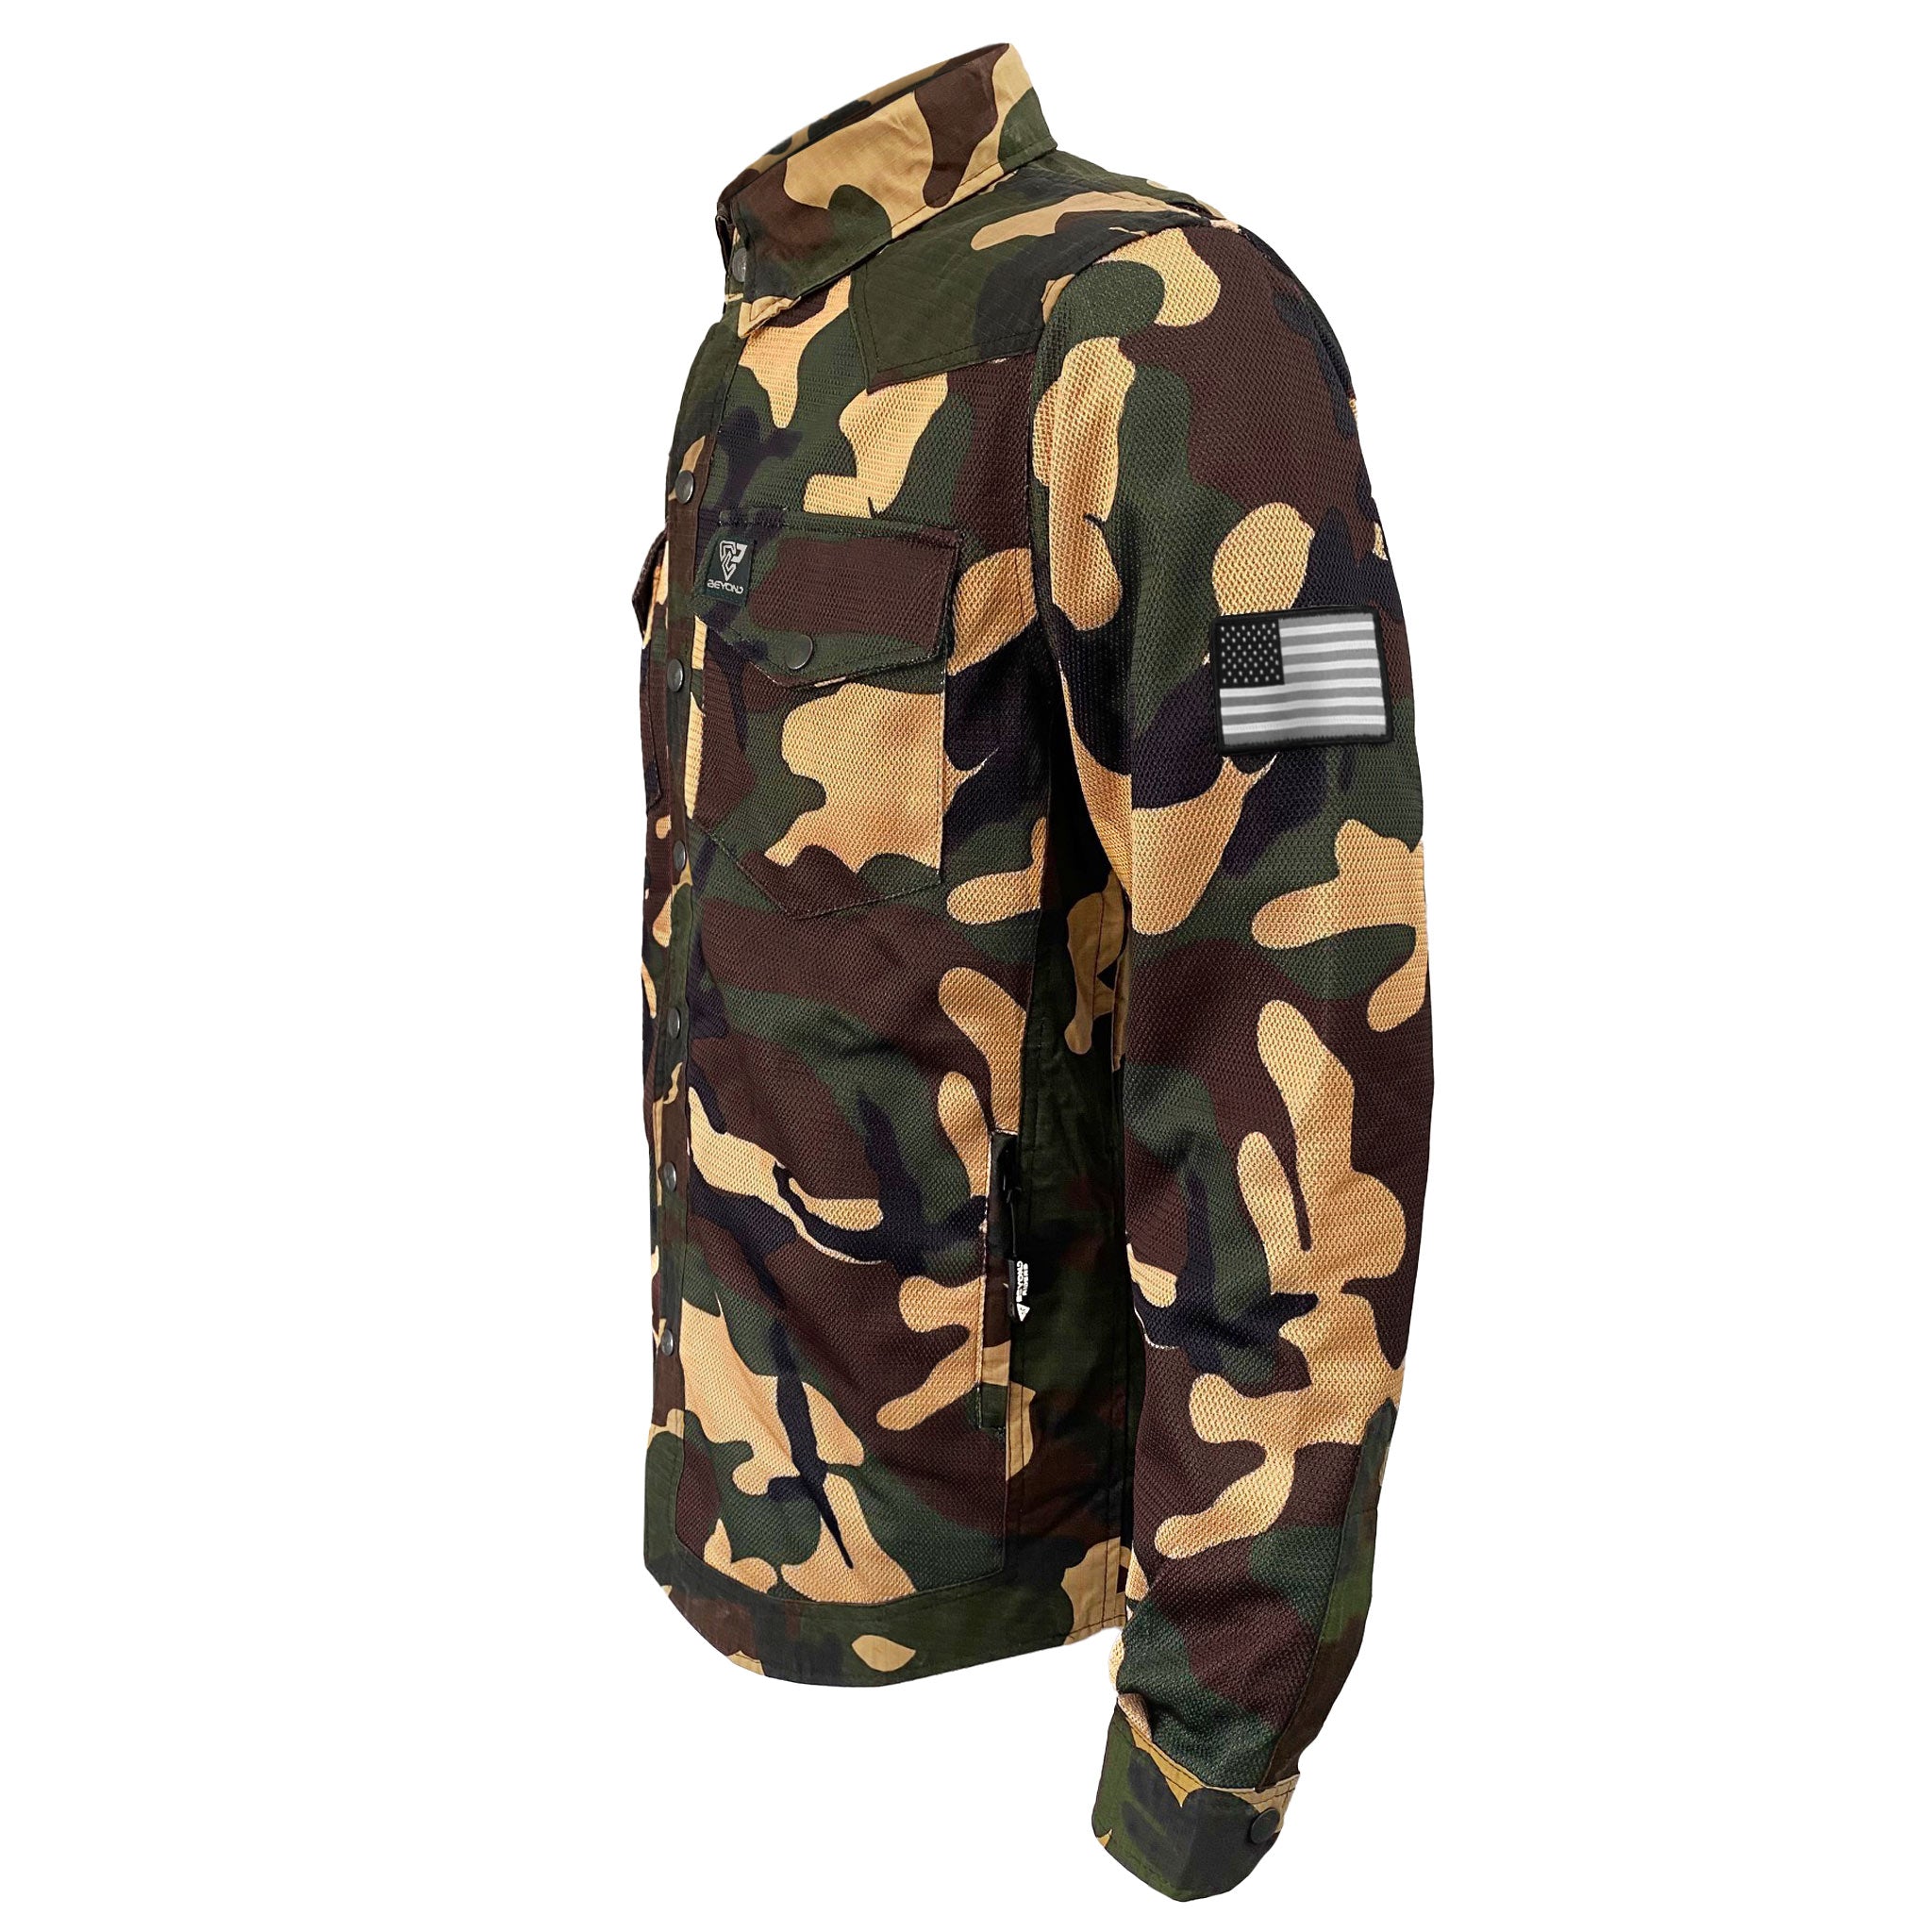 Summer Mesh Protective Camouflage Shirt “Knight Hawk” - Dark Color